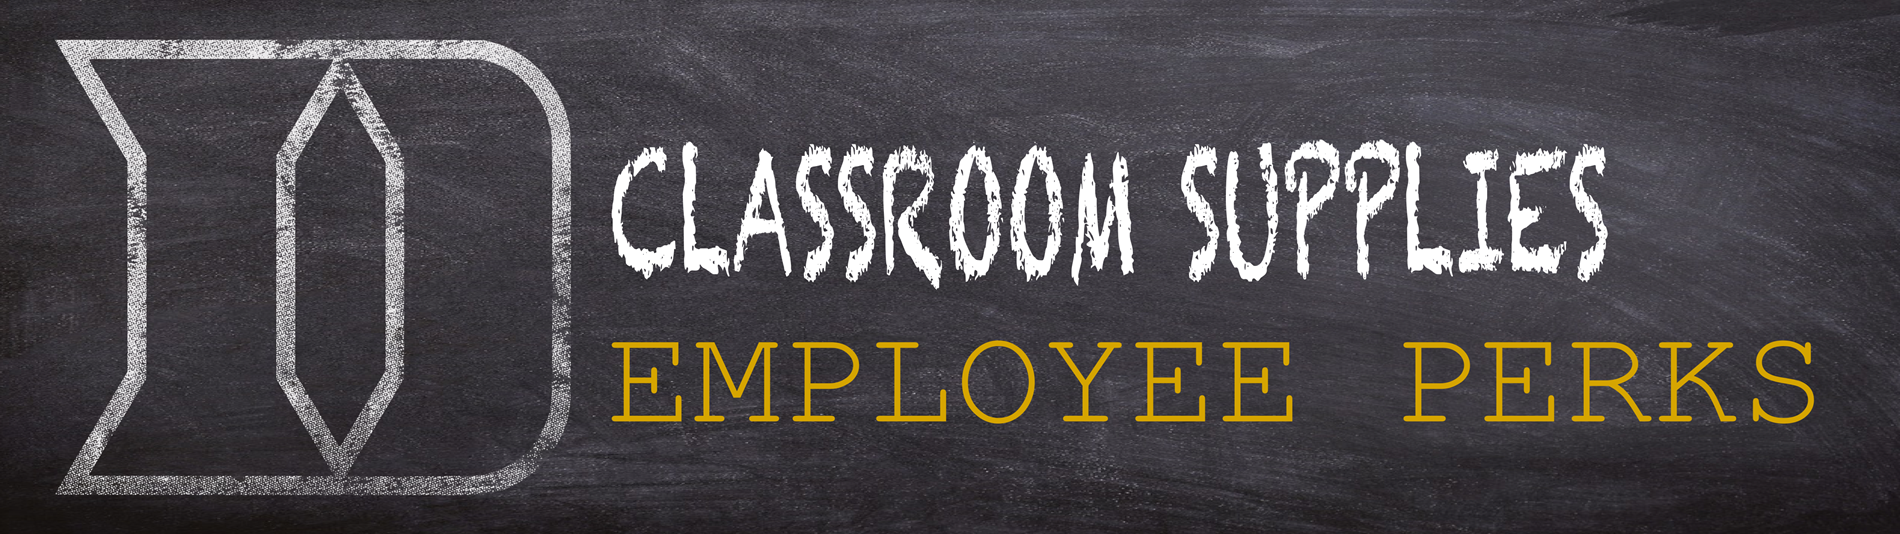 Classroom Supplies Employee Perks Logo